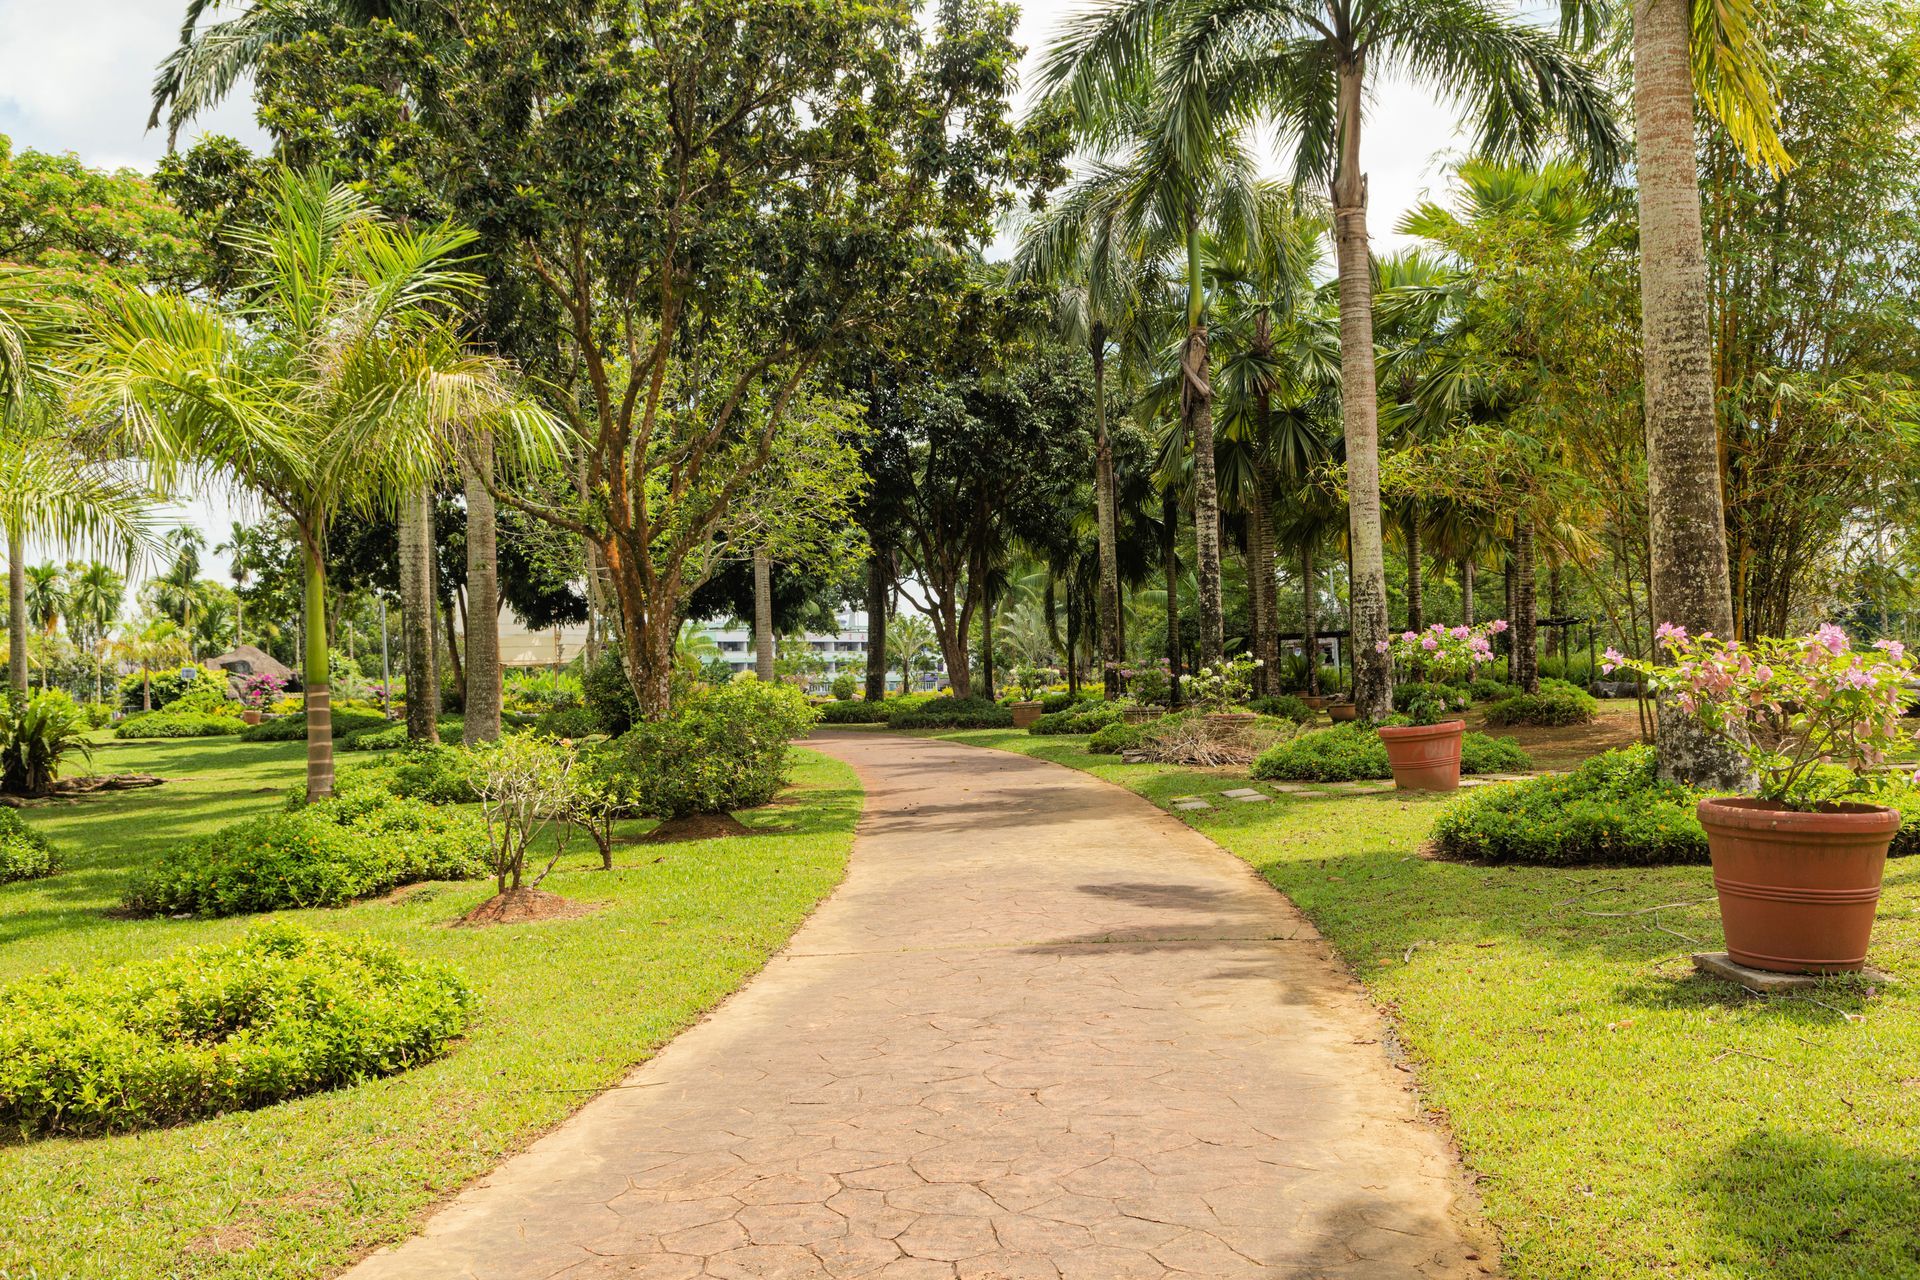 A walkway at a tropical park.